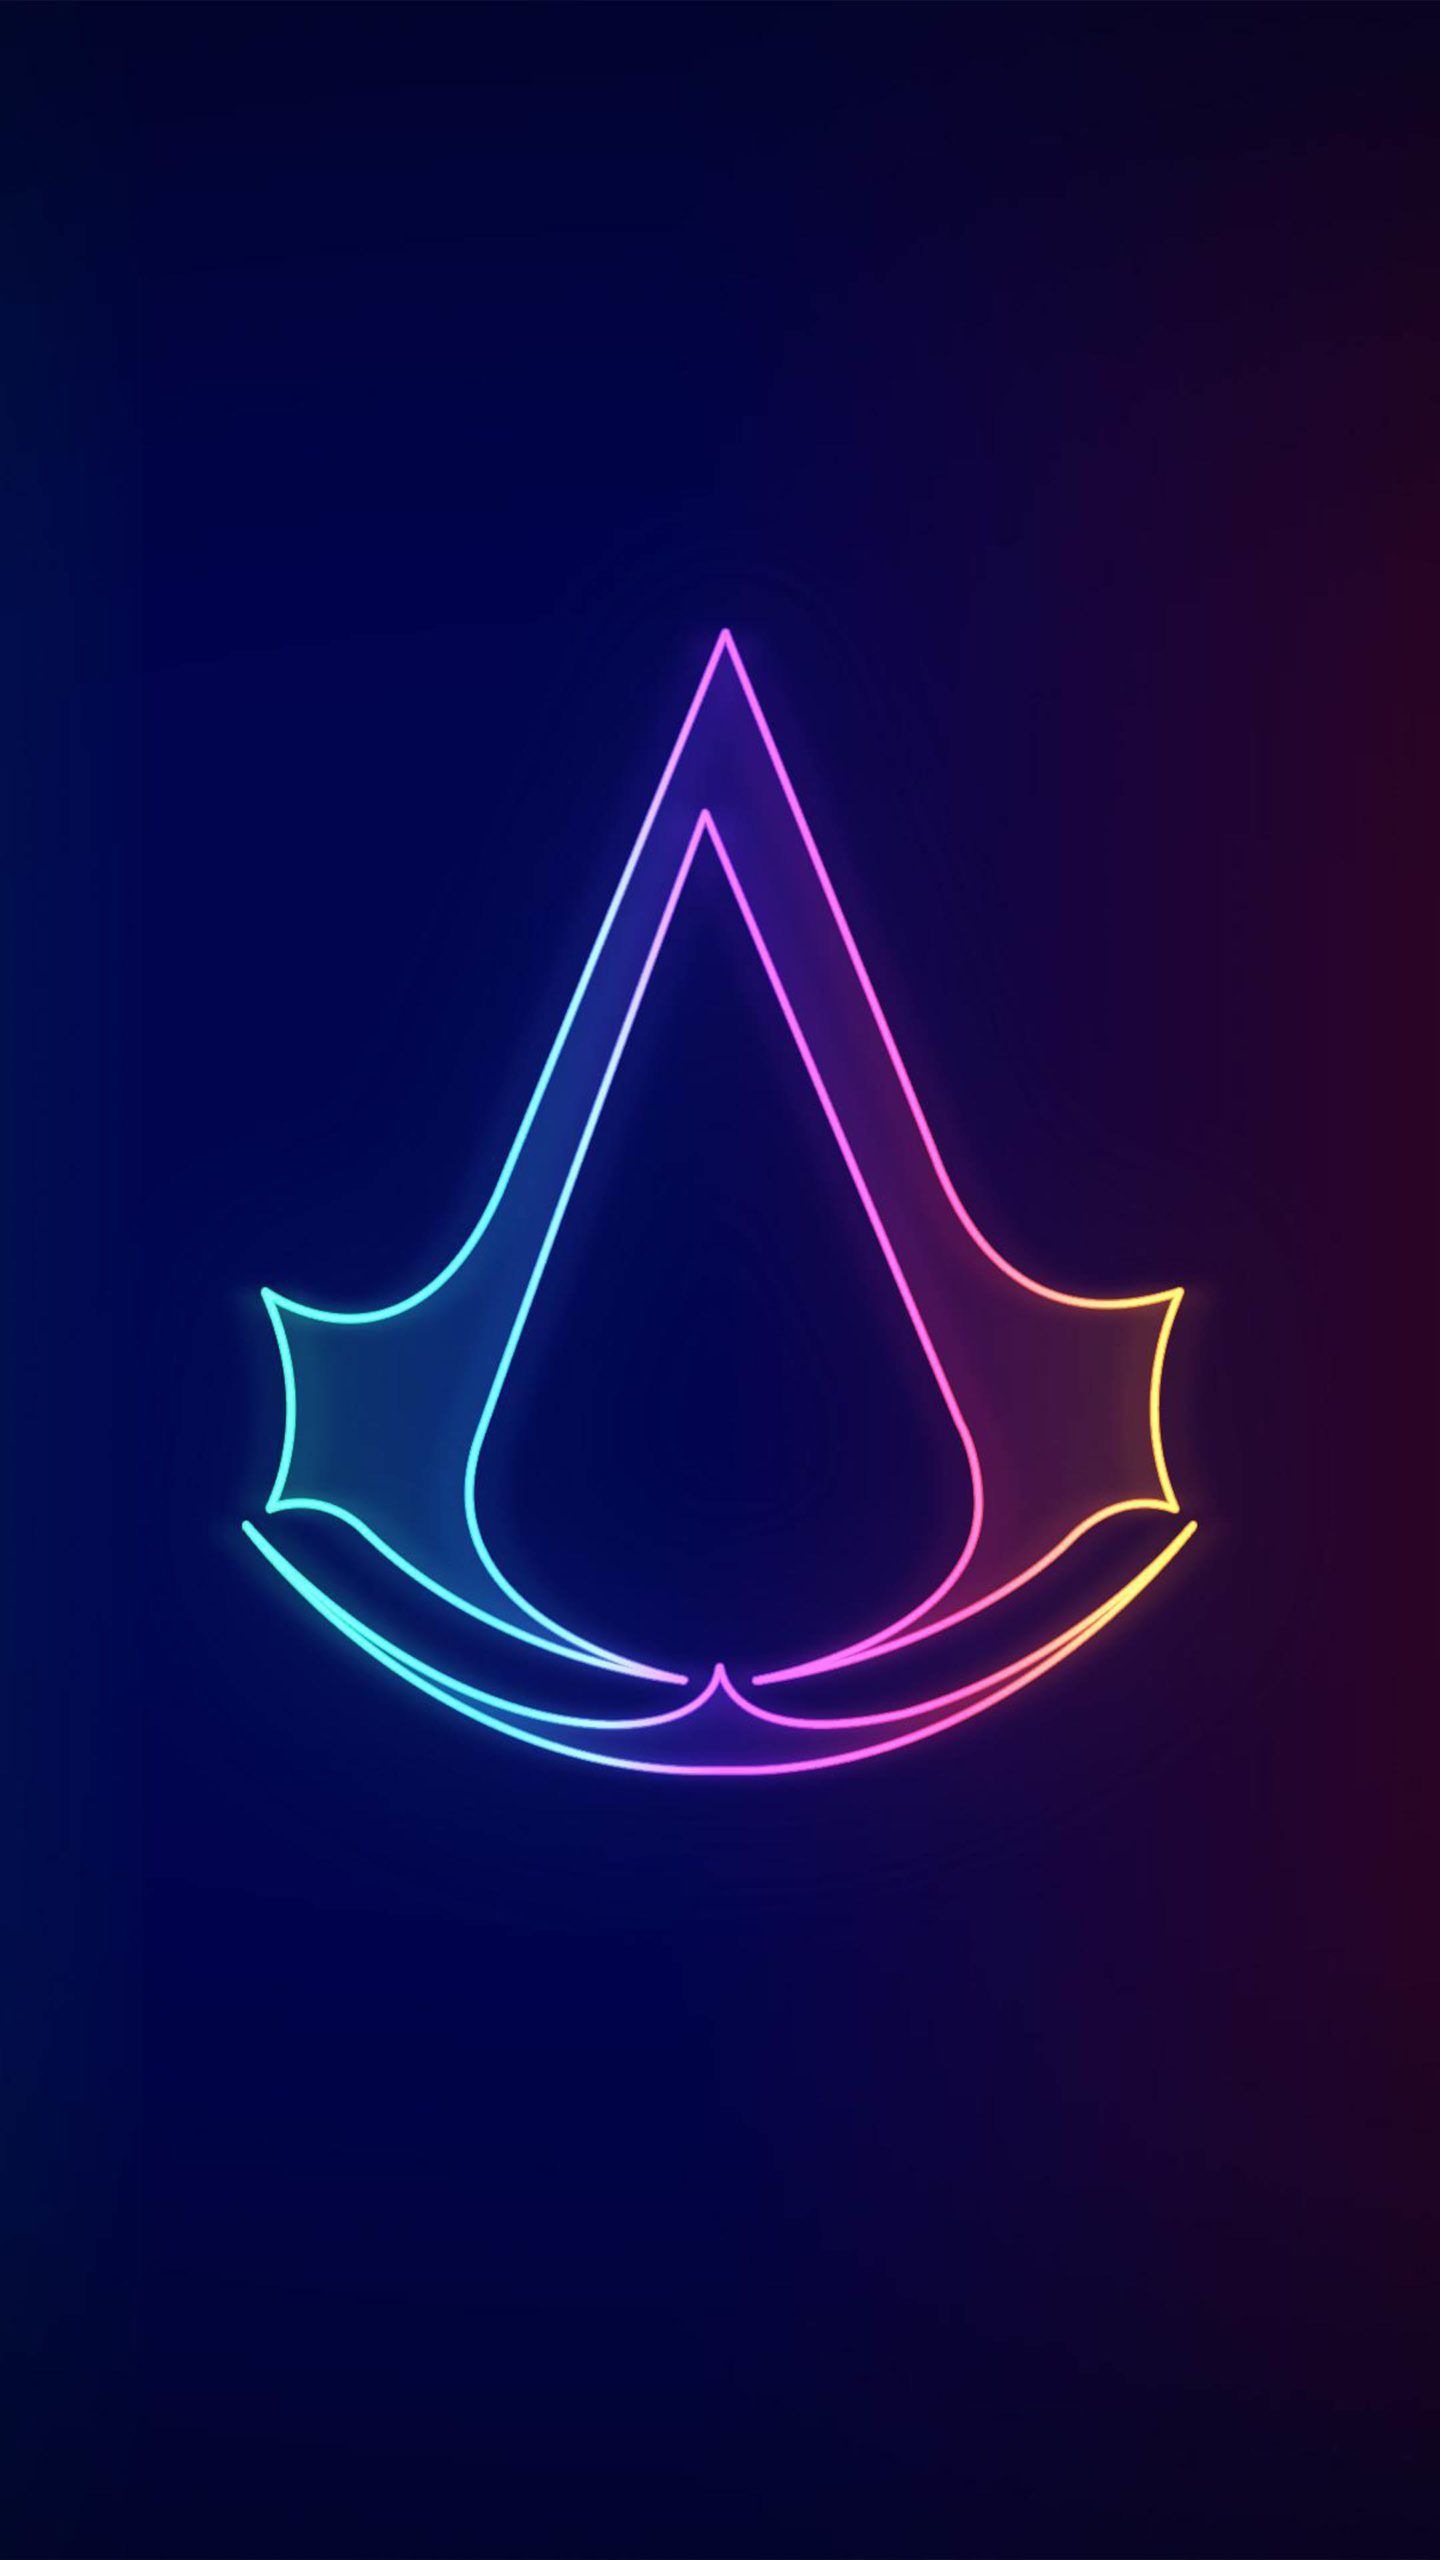 Assassin's Creed Valhalla Neo Logo 4K Ultra HD Mobile Wallpaper. Assassin's creed wallpaper, Assassins creed, Assassins creed logo